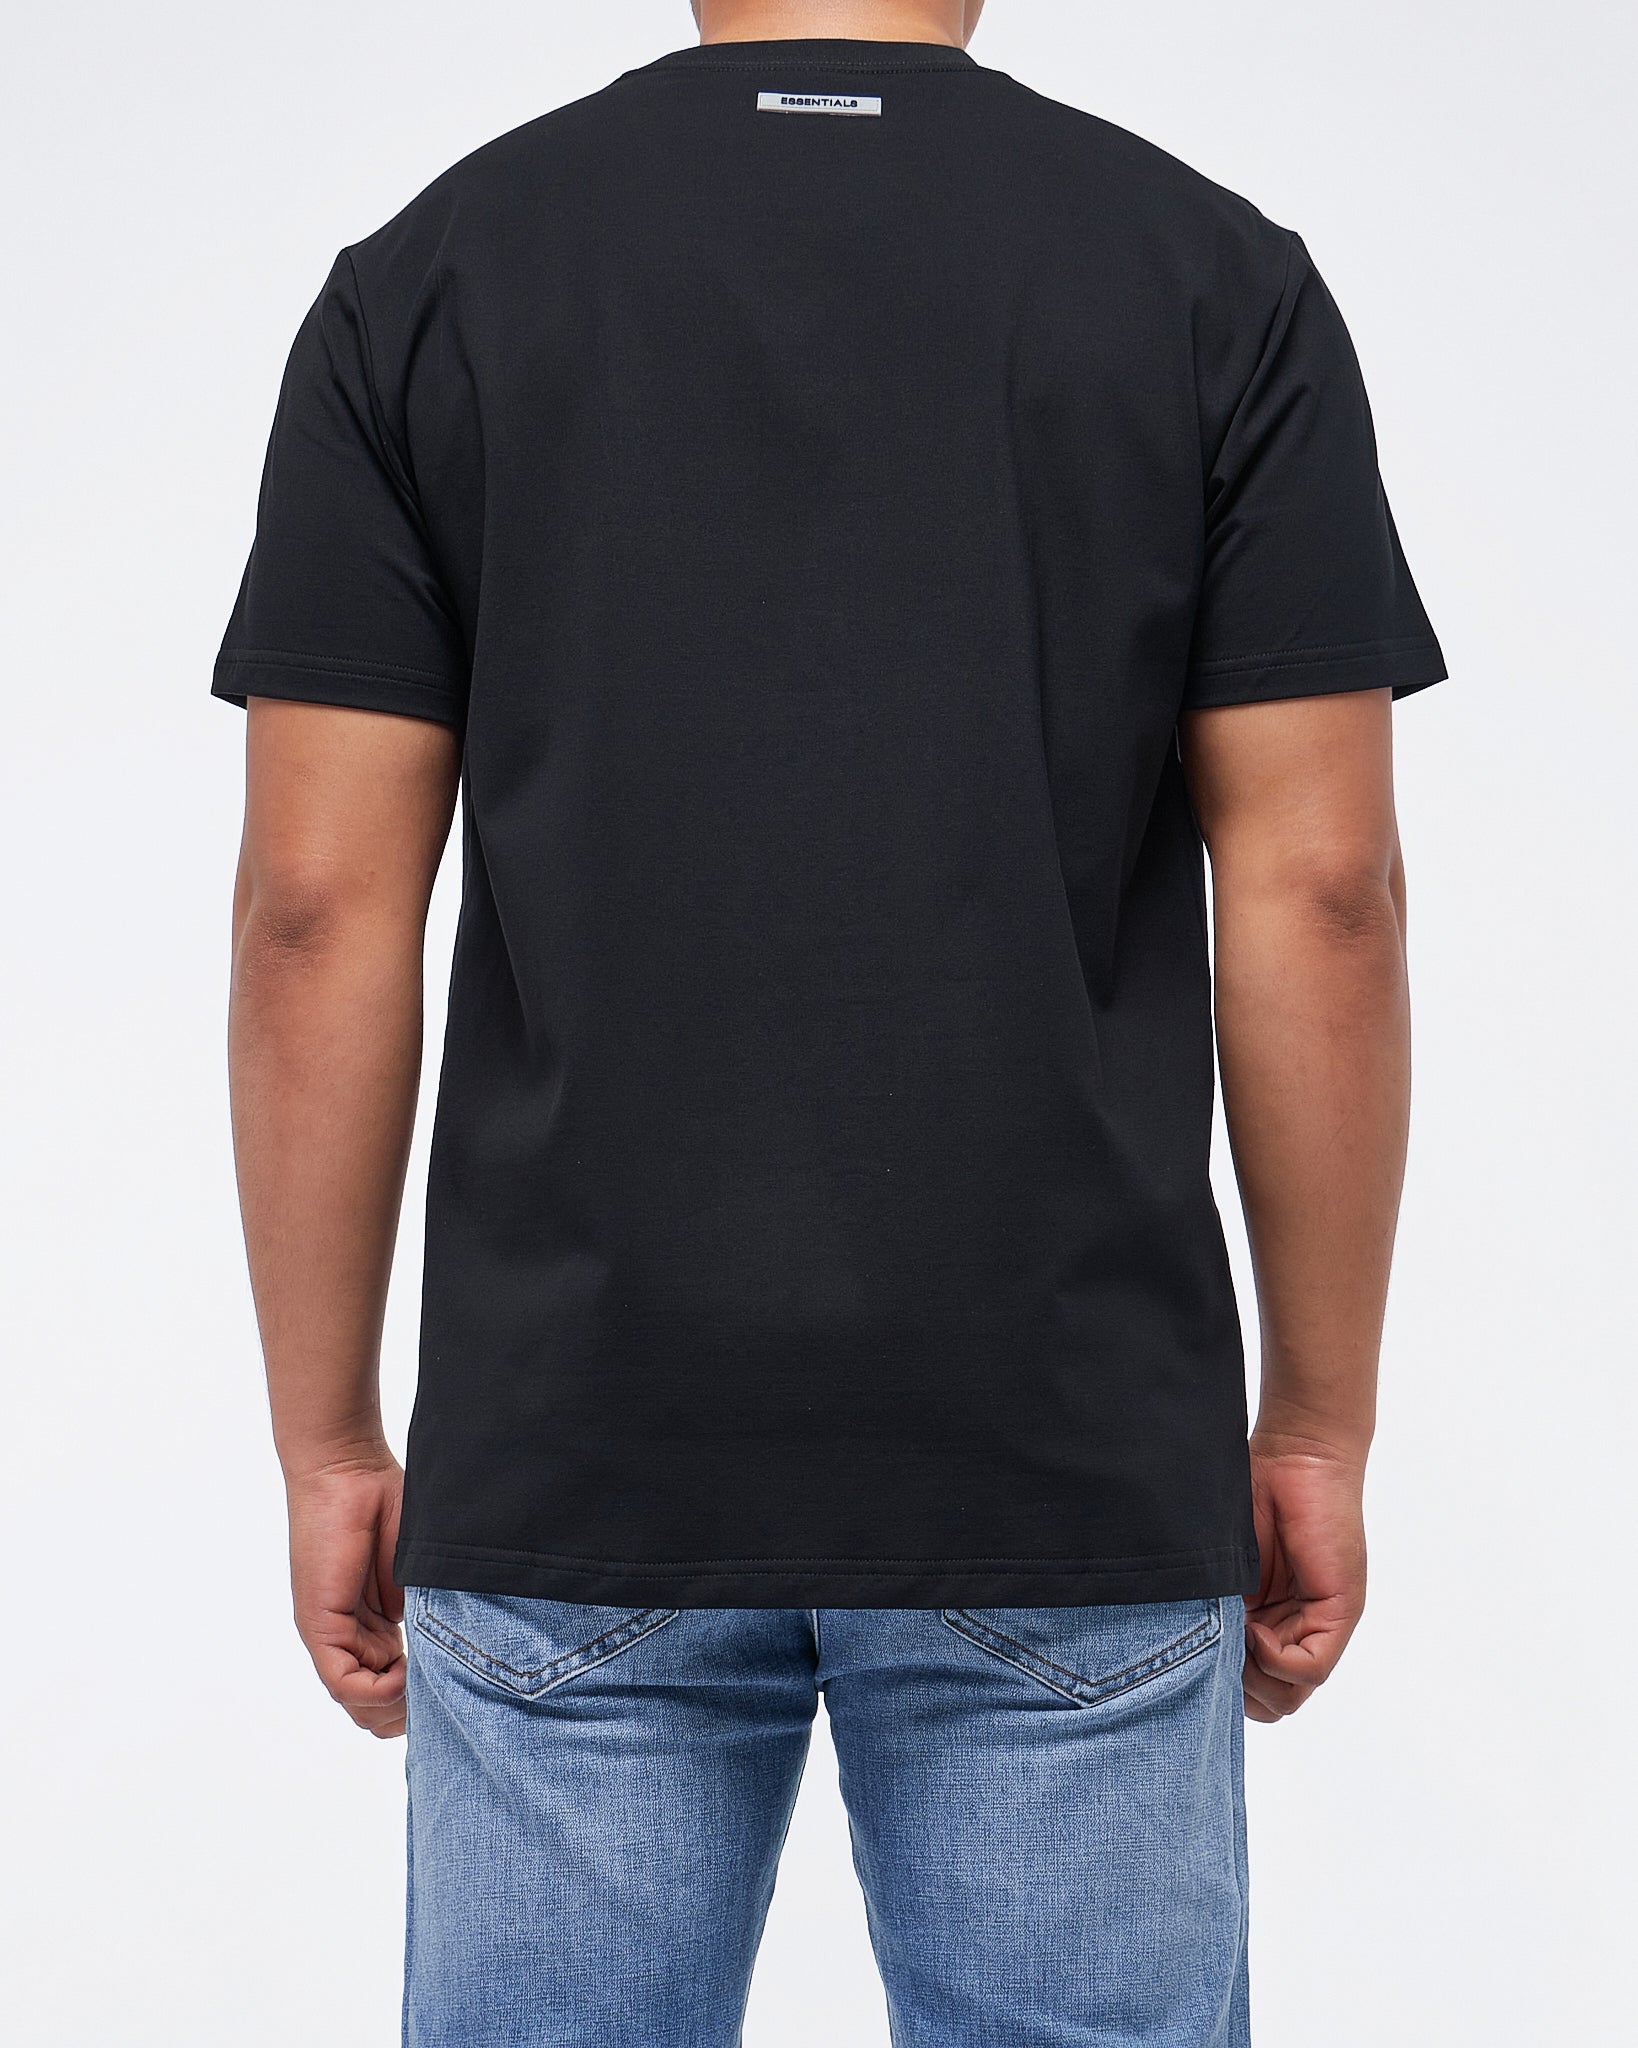 MOI OUTFIT-Essentials 3D Logo Printed Men T-Shirt 14.90